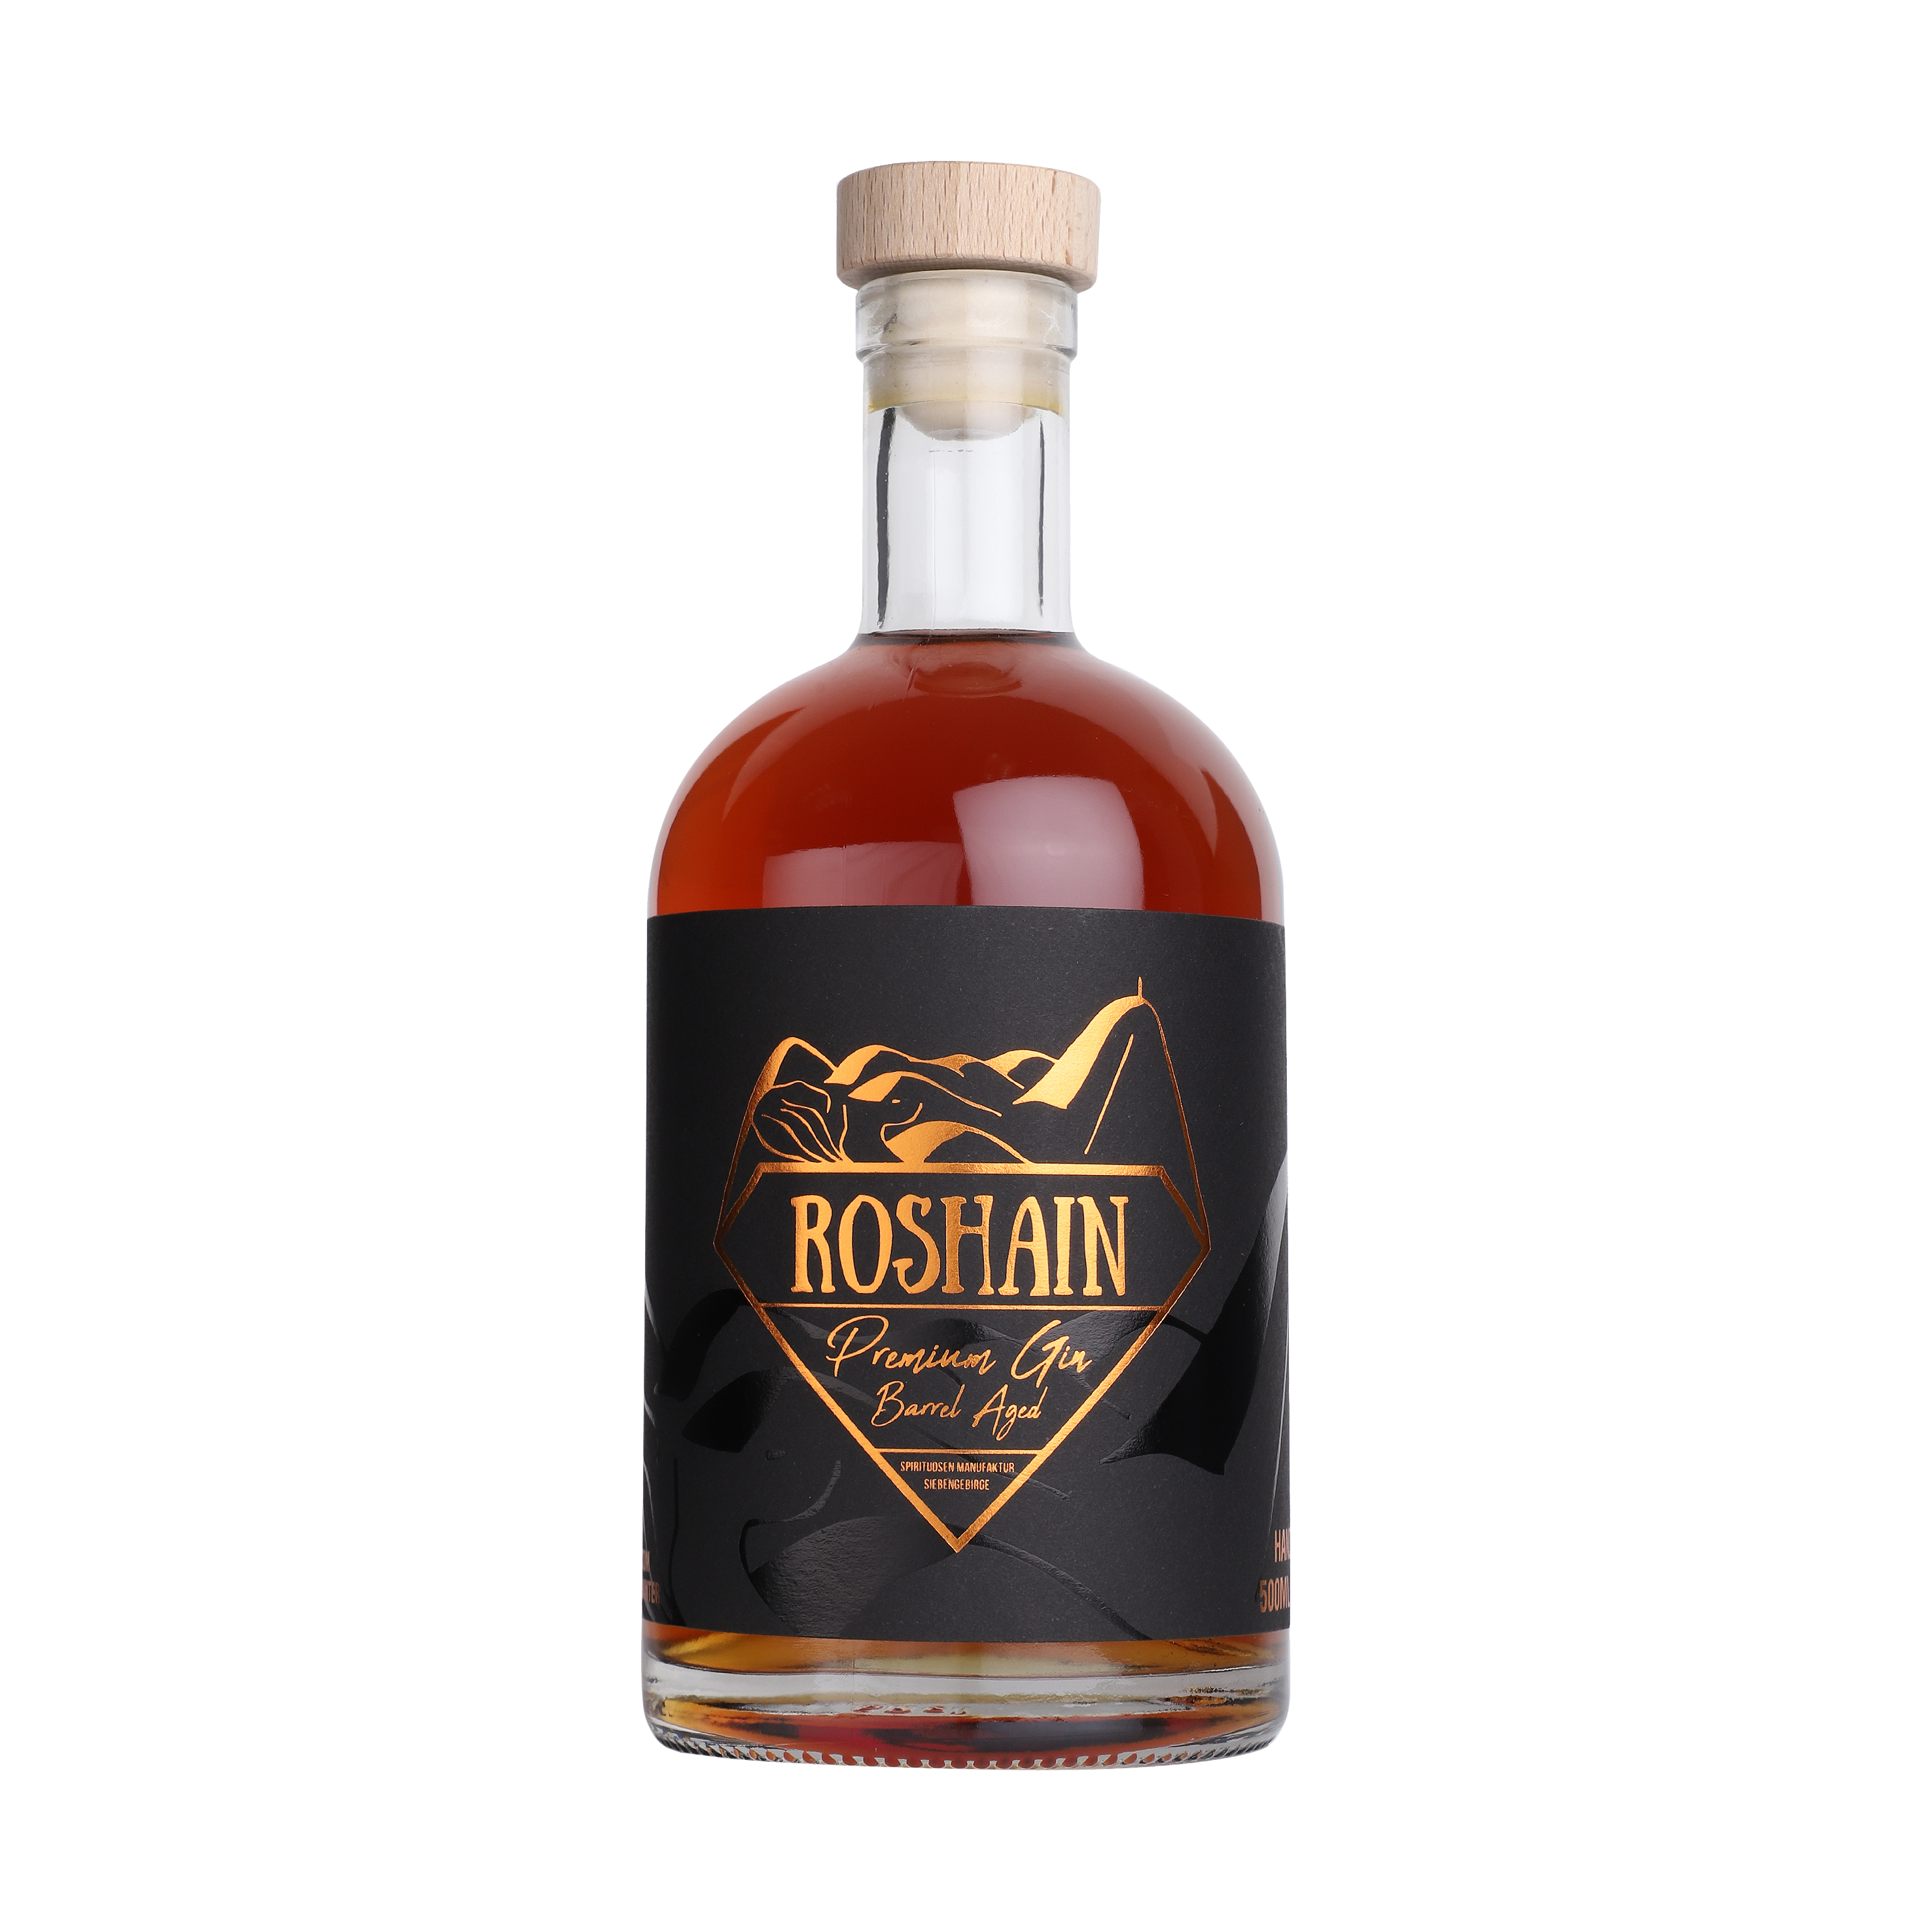 62_SMS Roshain Siebengebirge Premium Gin 500ml